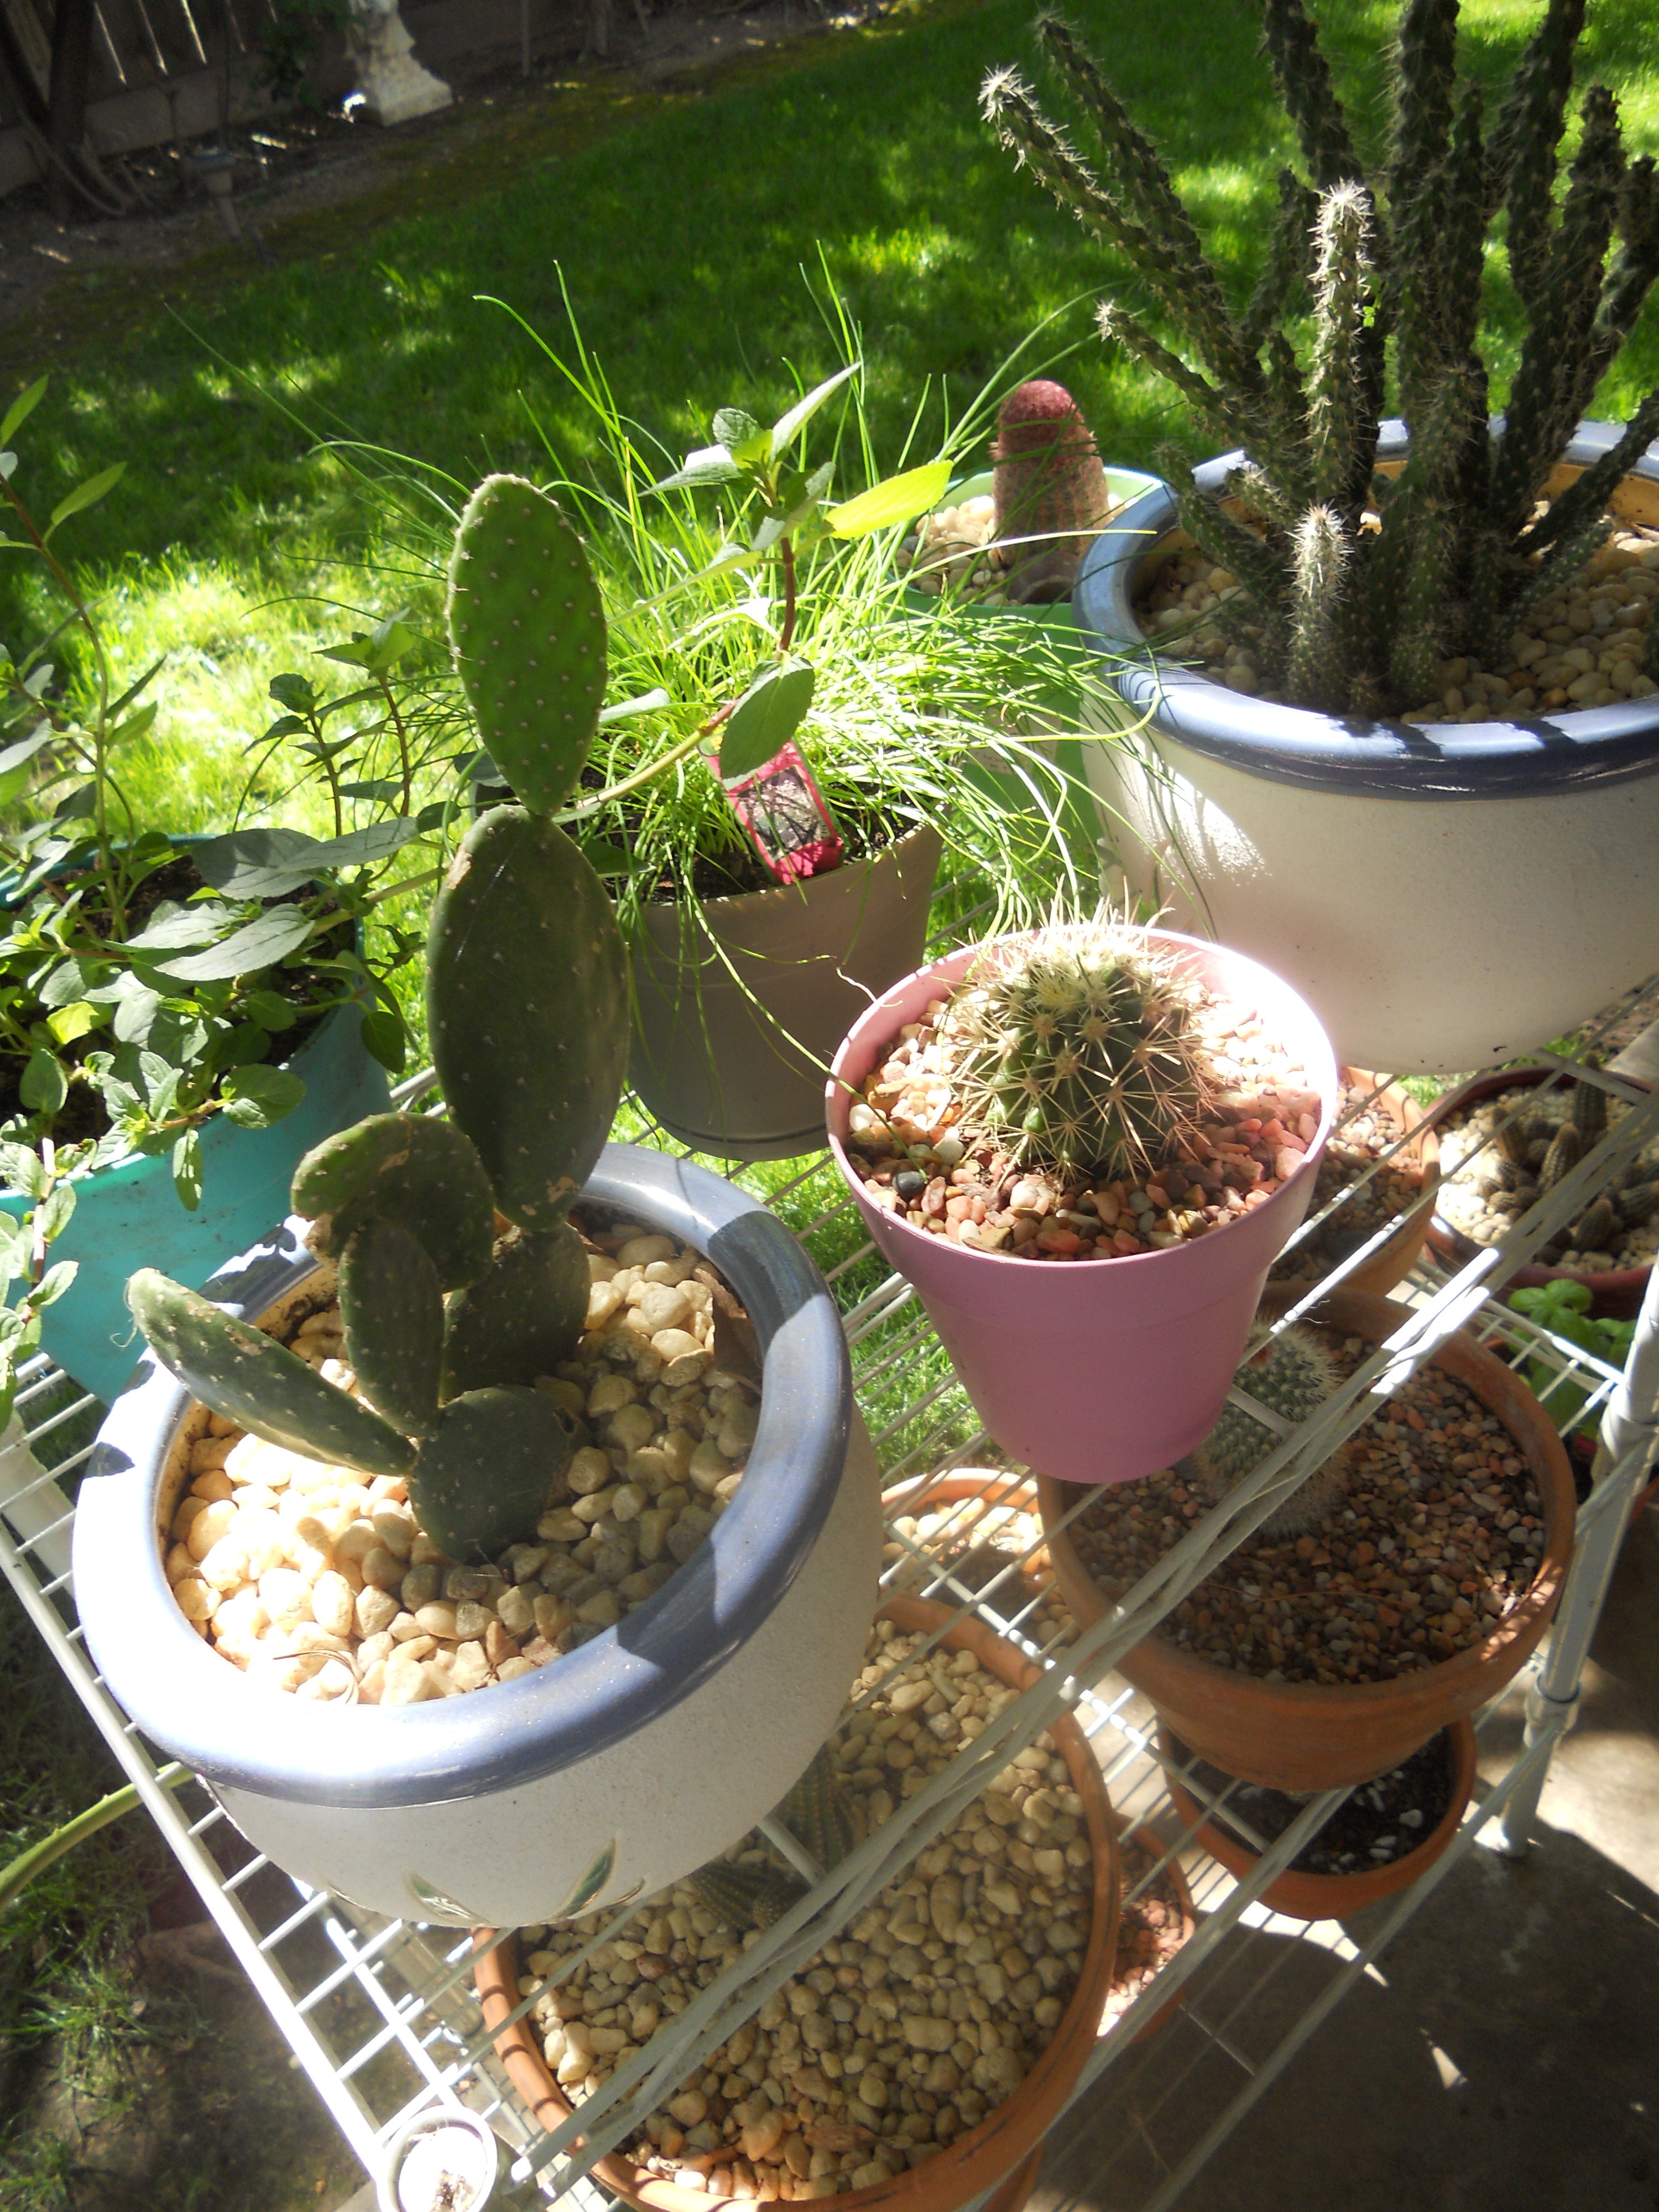 Bunch o Cactus – I Like This One